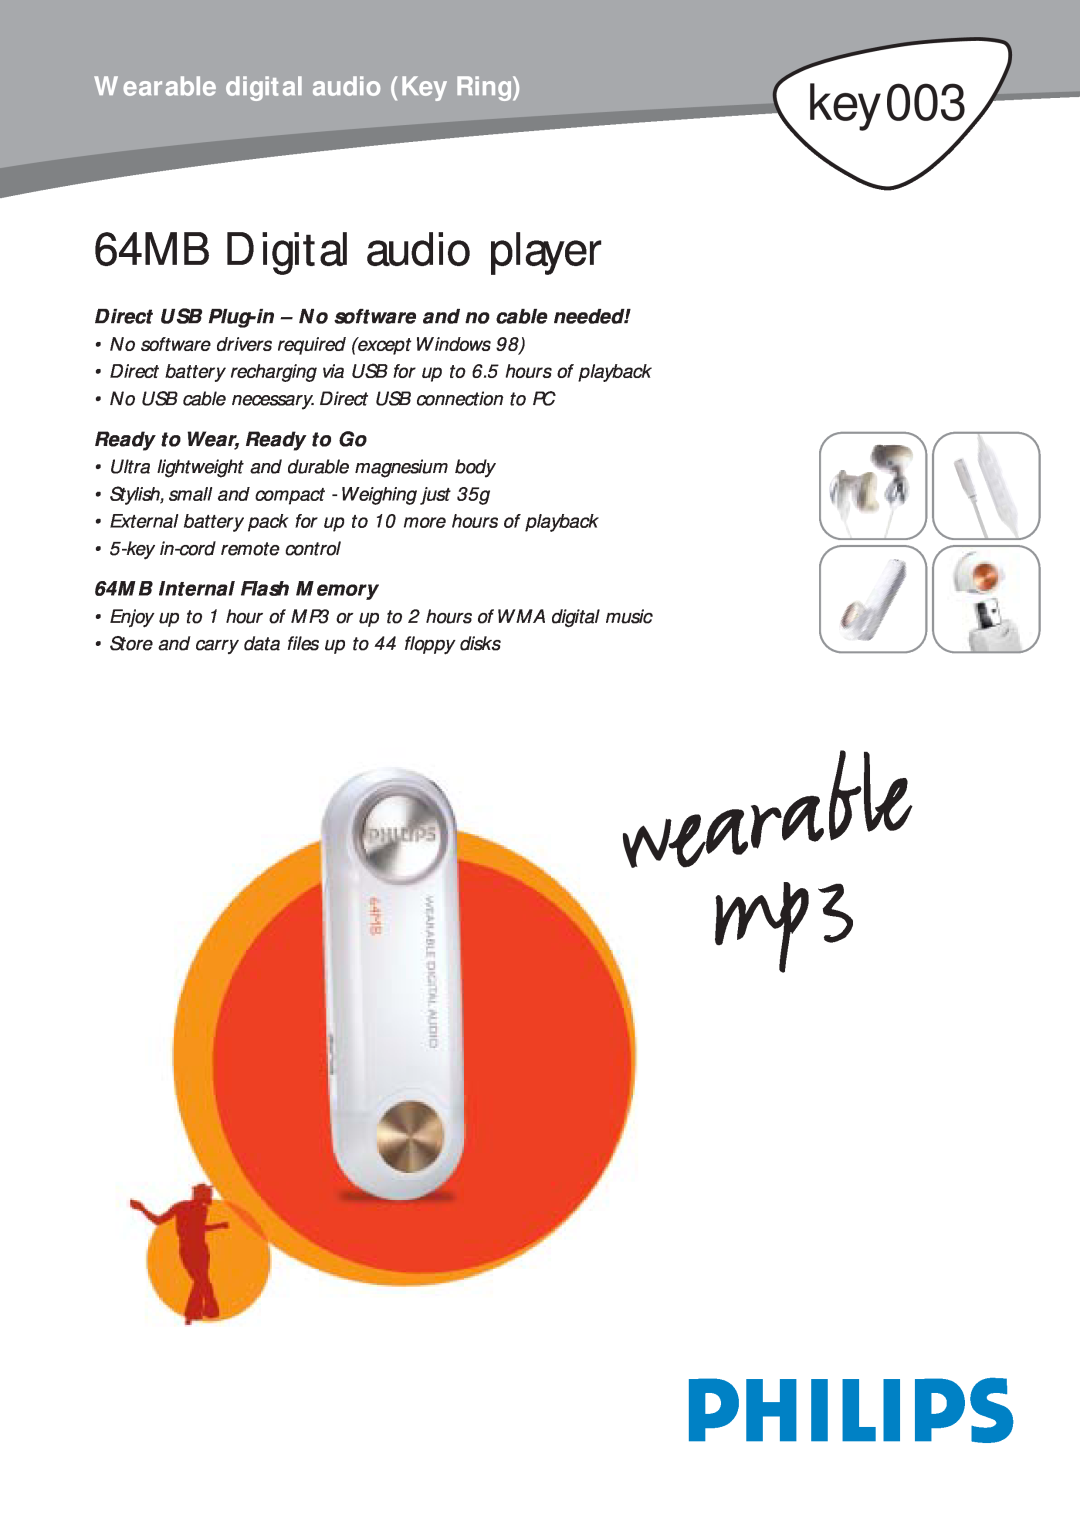 Philips manual key003, 64MB Digital audio player, Wearable digital audio Key Ring, Ready to Wear, Ready to Go 